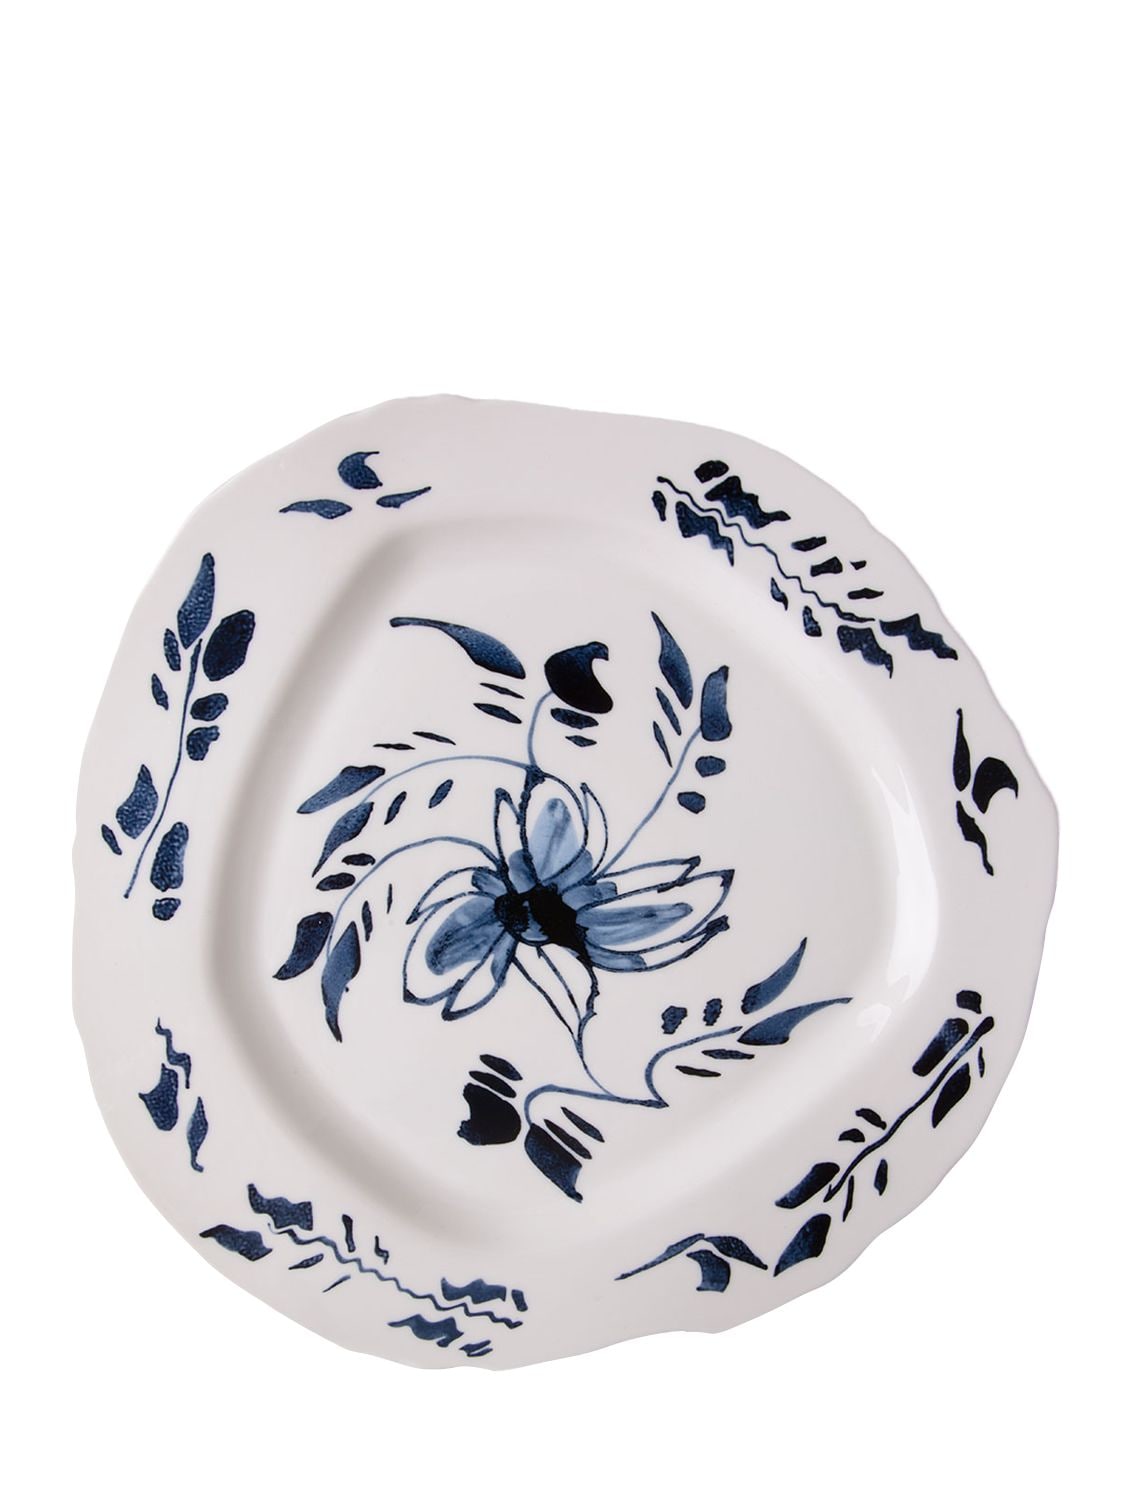 Seletti Classic On Acid English Delft Dish In White,blue